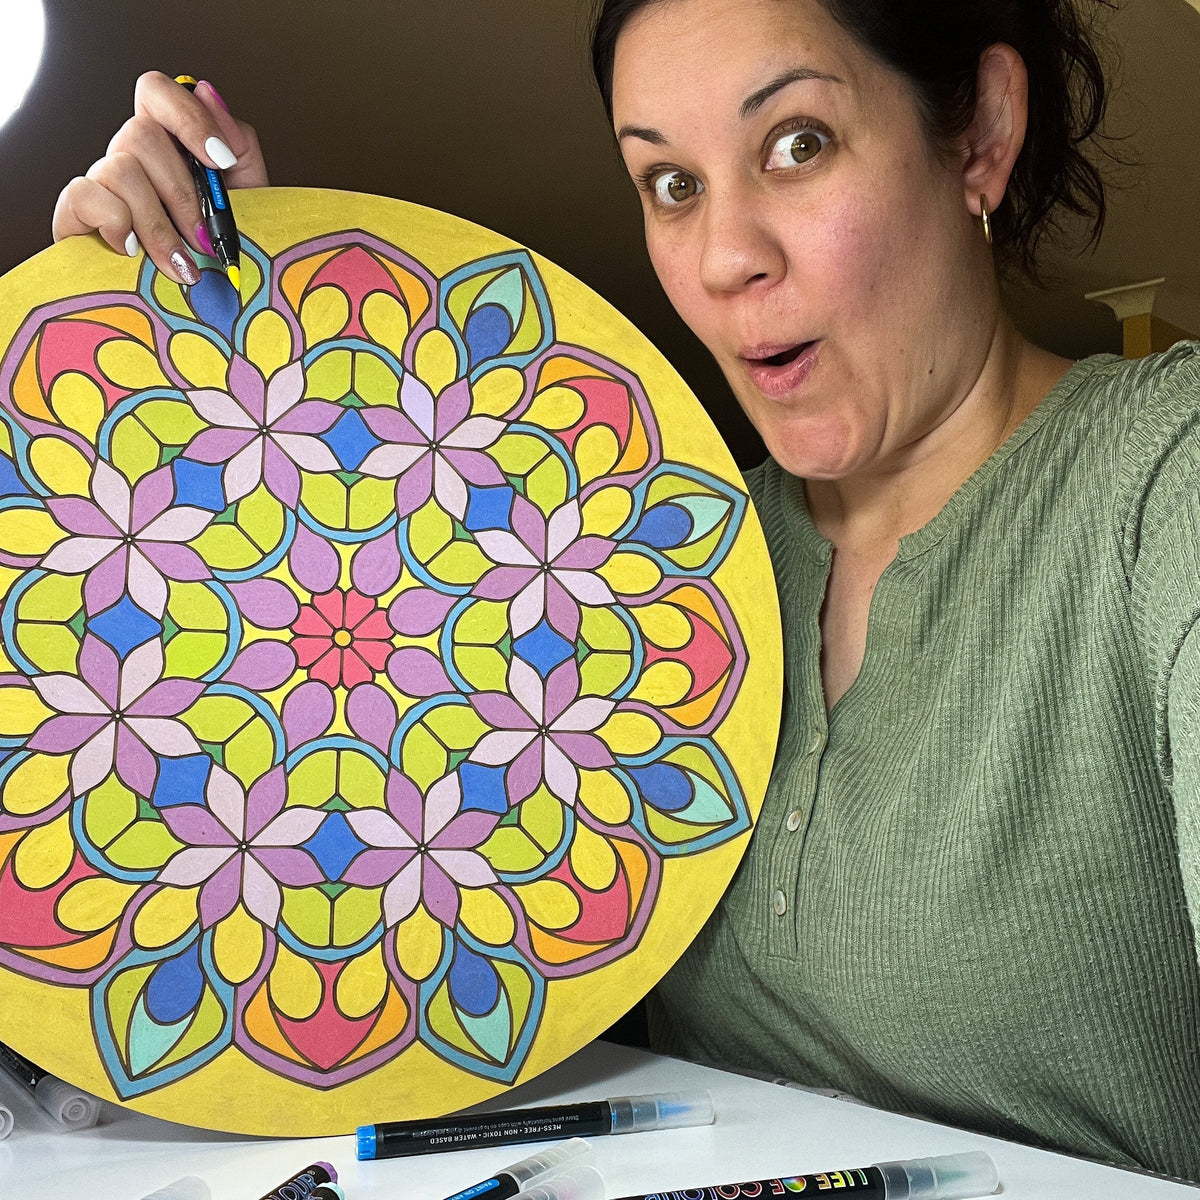 Life of Colour Mandala Painting Kit - The Kaleidoscope (Essentials)